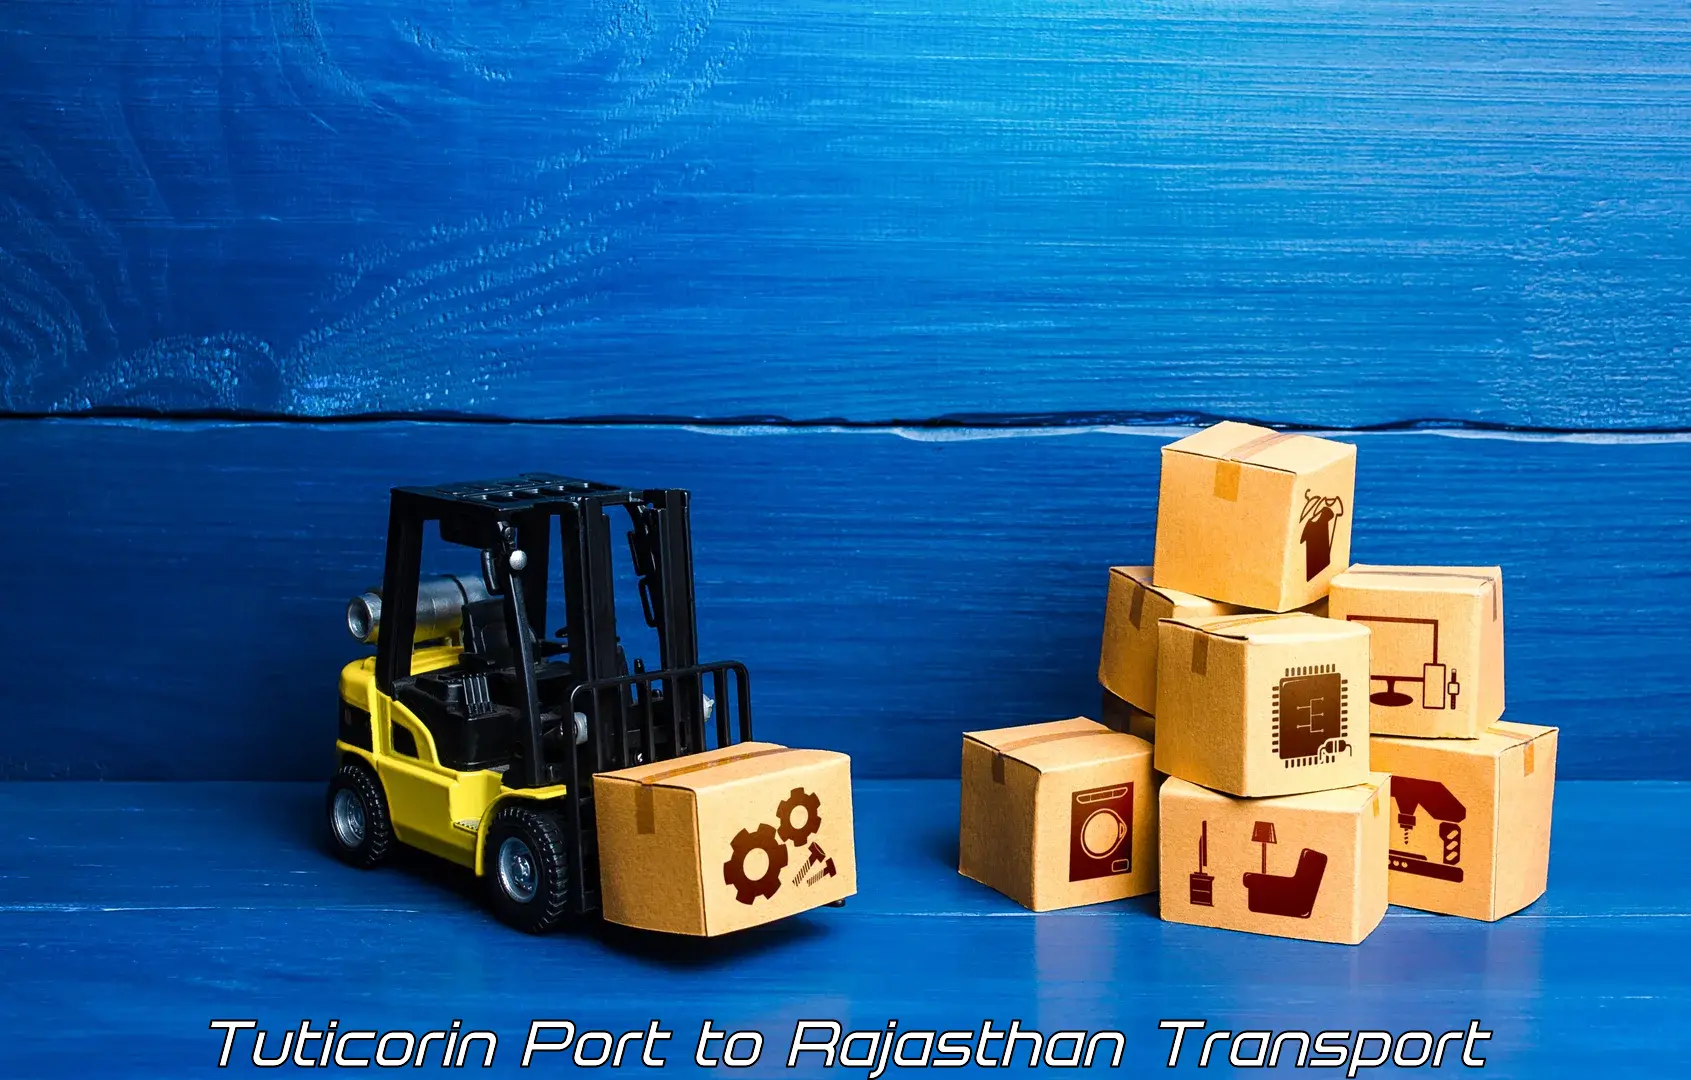 Part load transport service in India Tuticorin Port to Mandalgarh